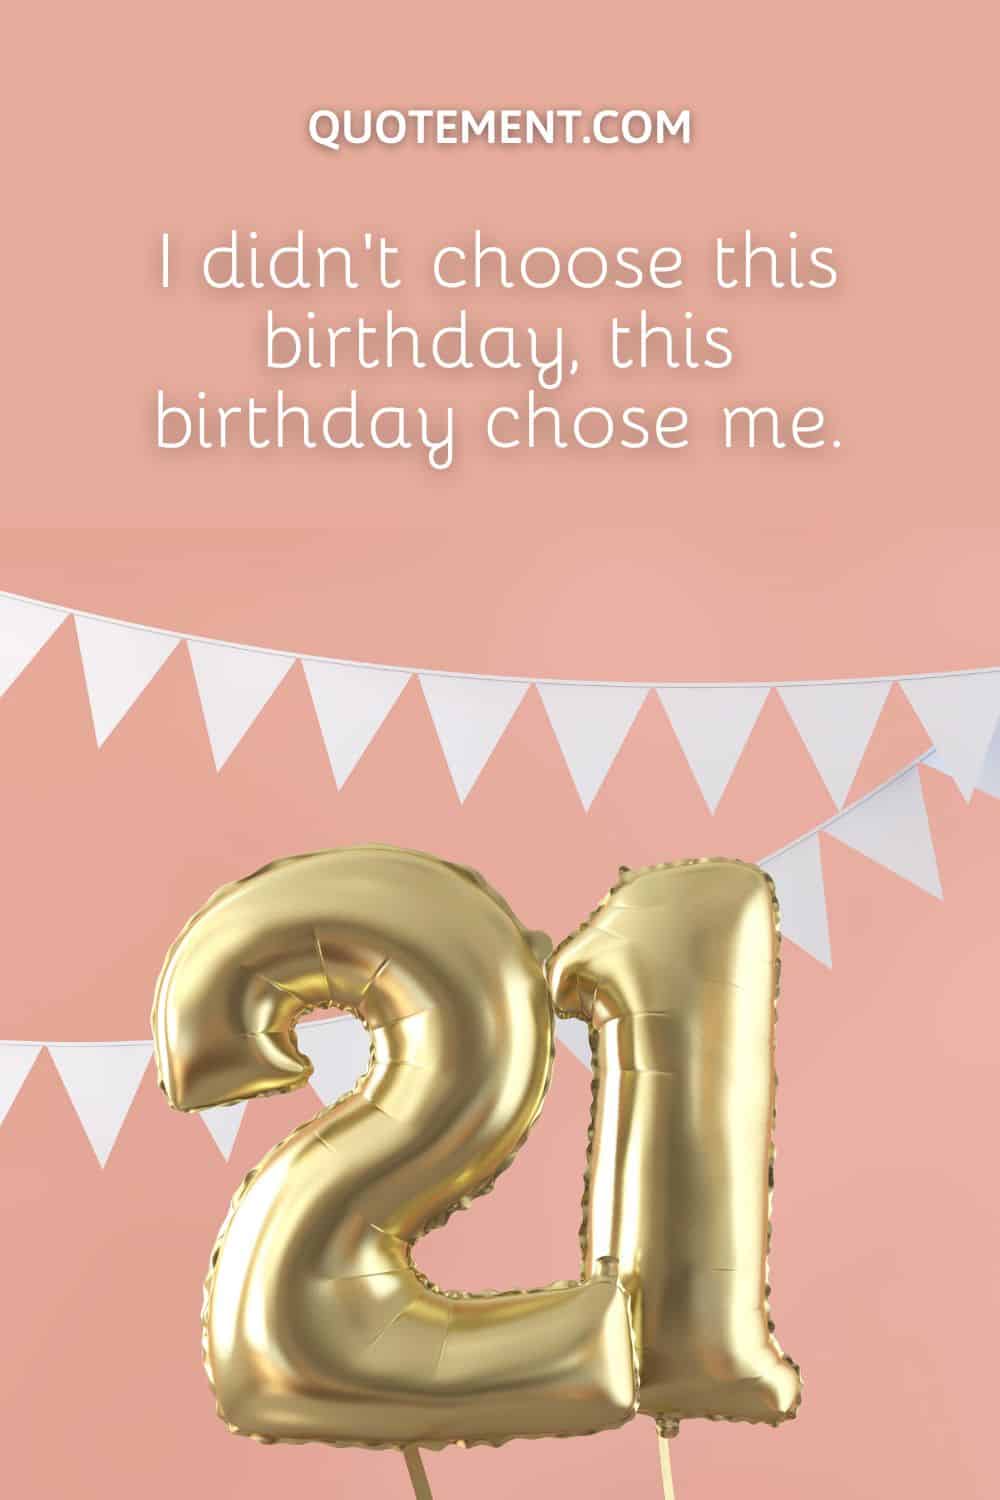 I didn't choose this birthday, this birthday chose me